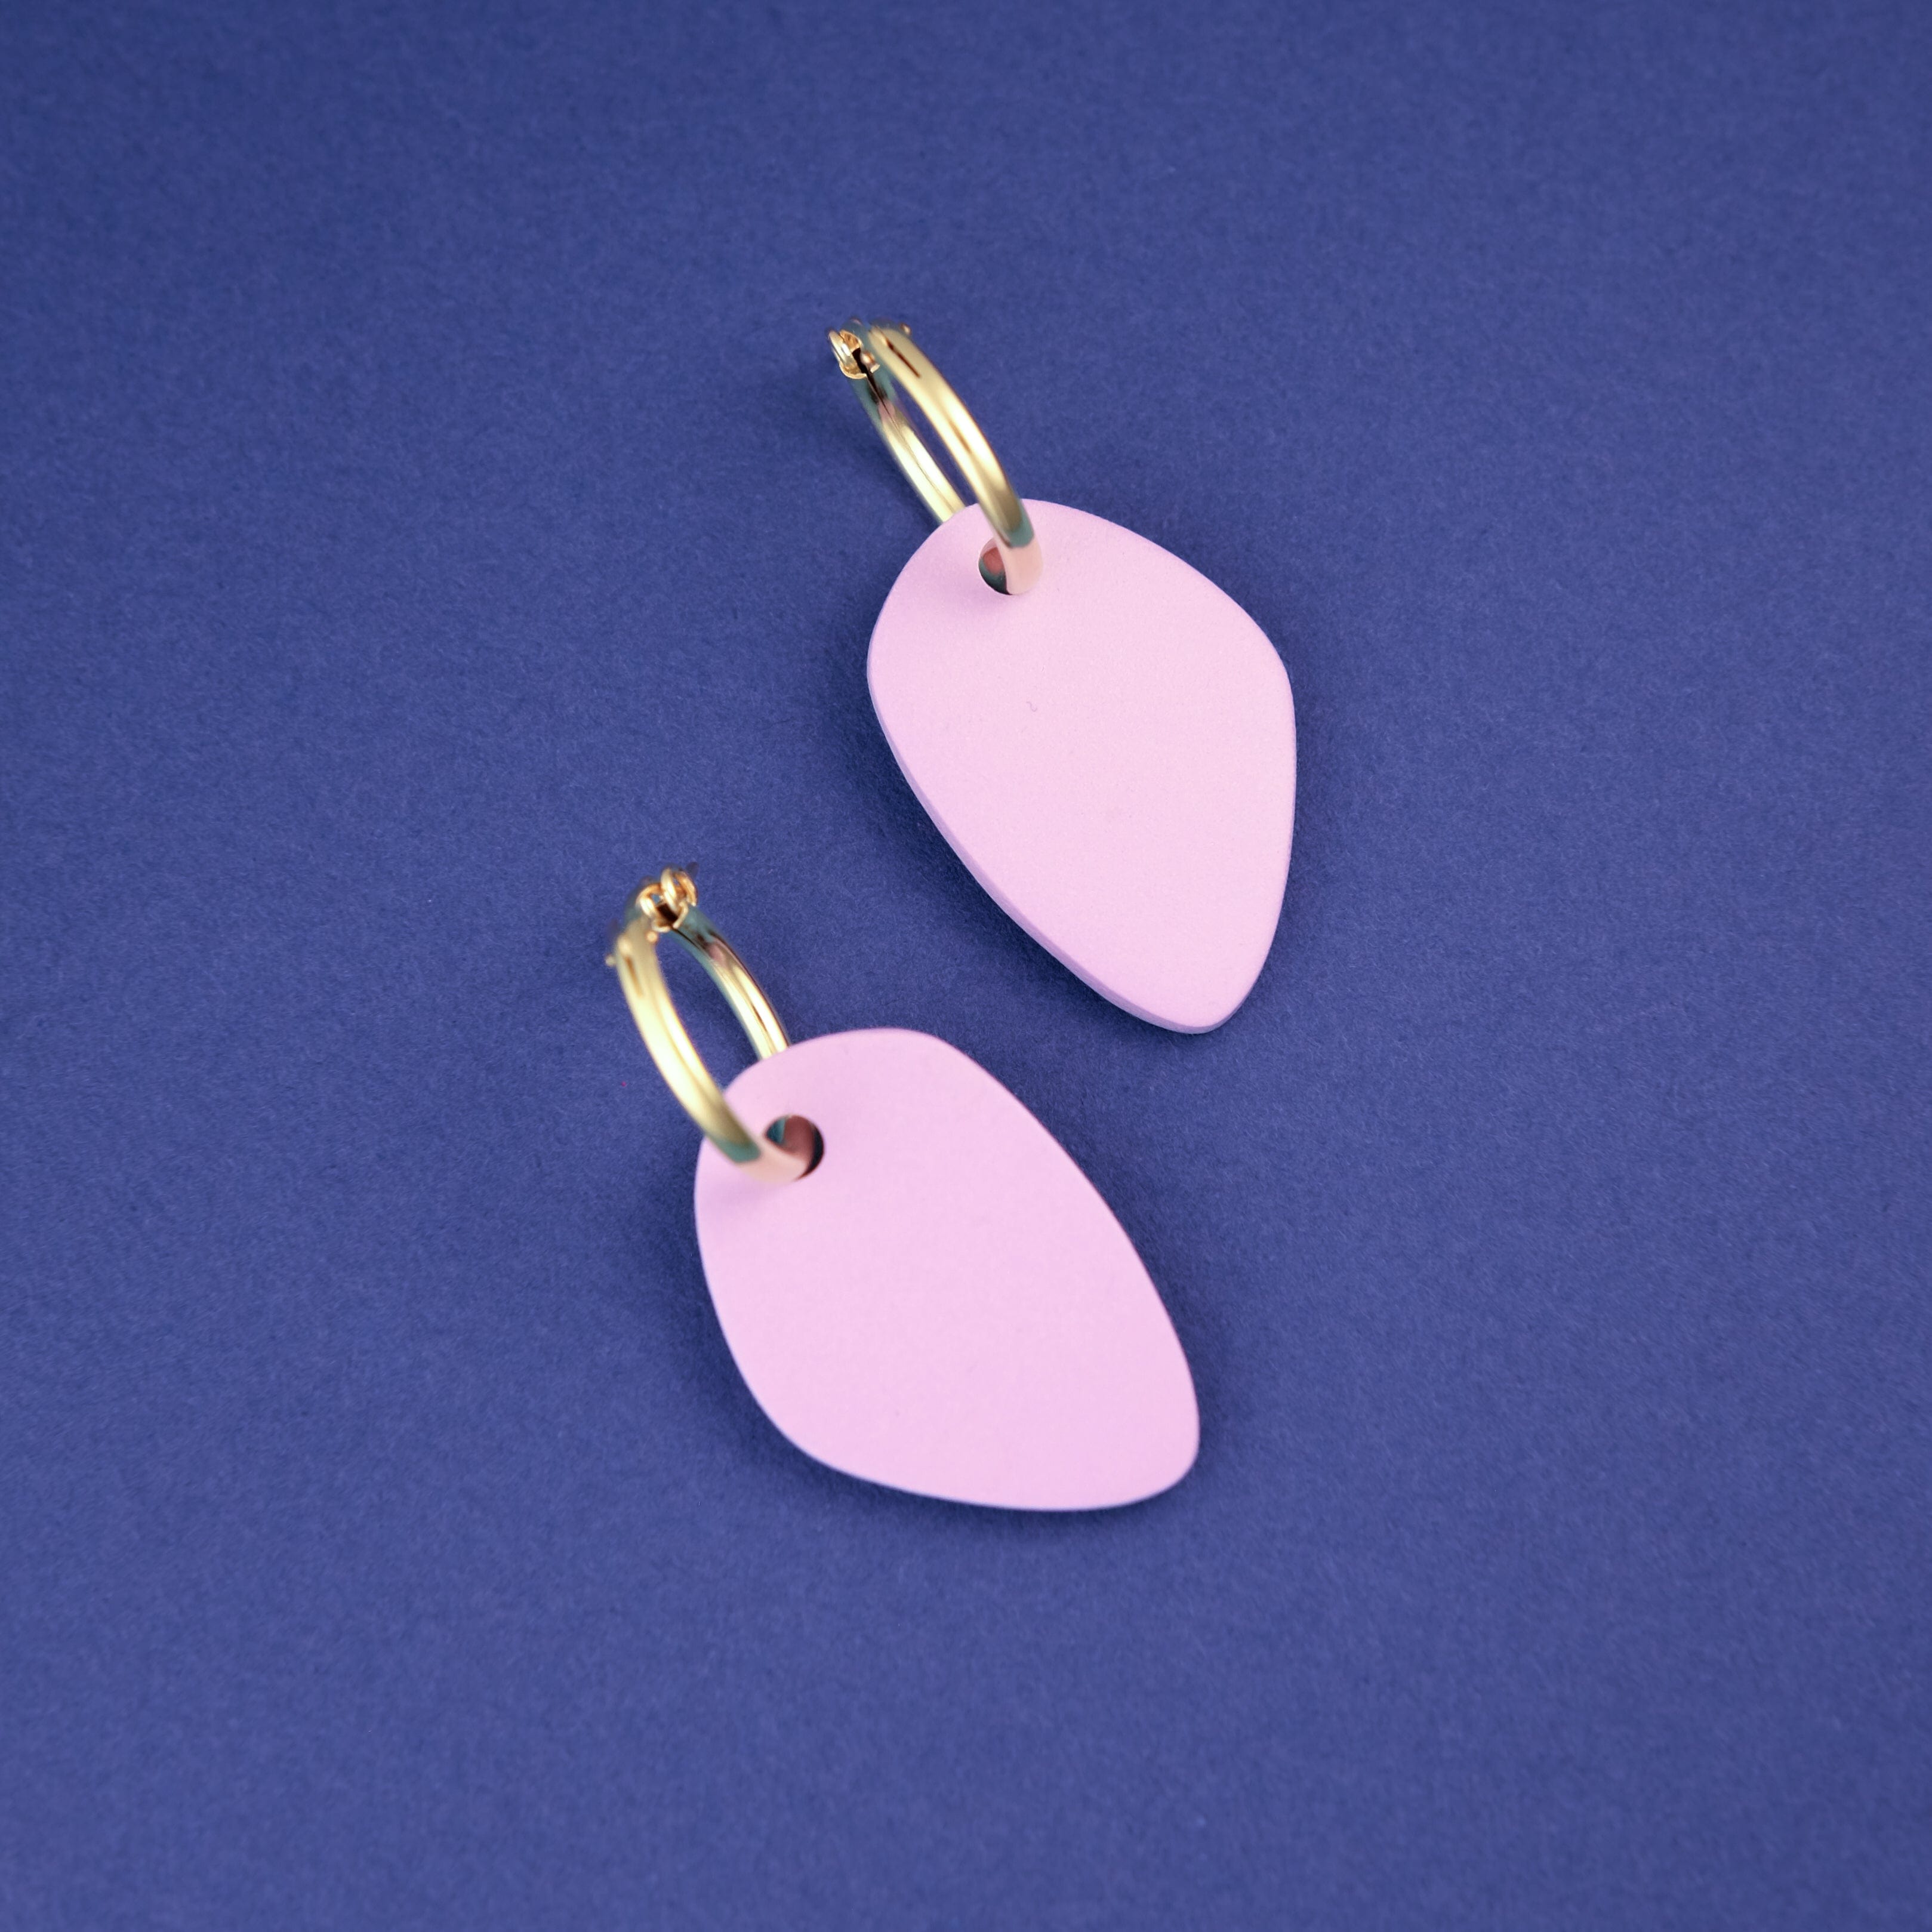 Organic shapes, hoop charm dangly earrings Calder inspired in lavender #color_lavender